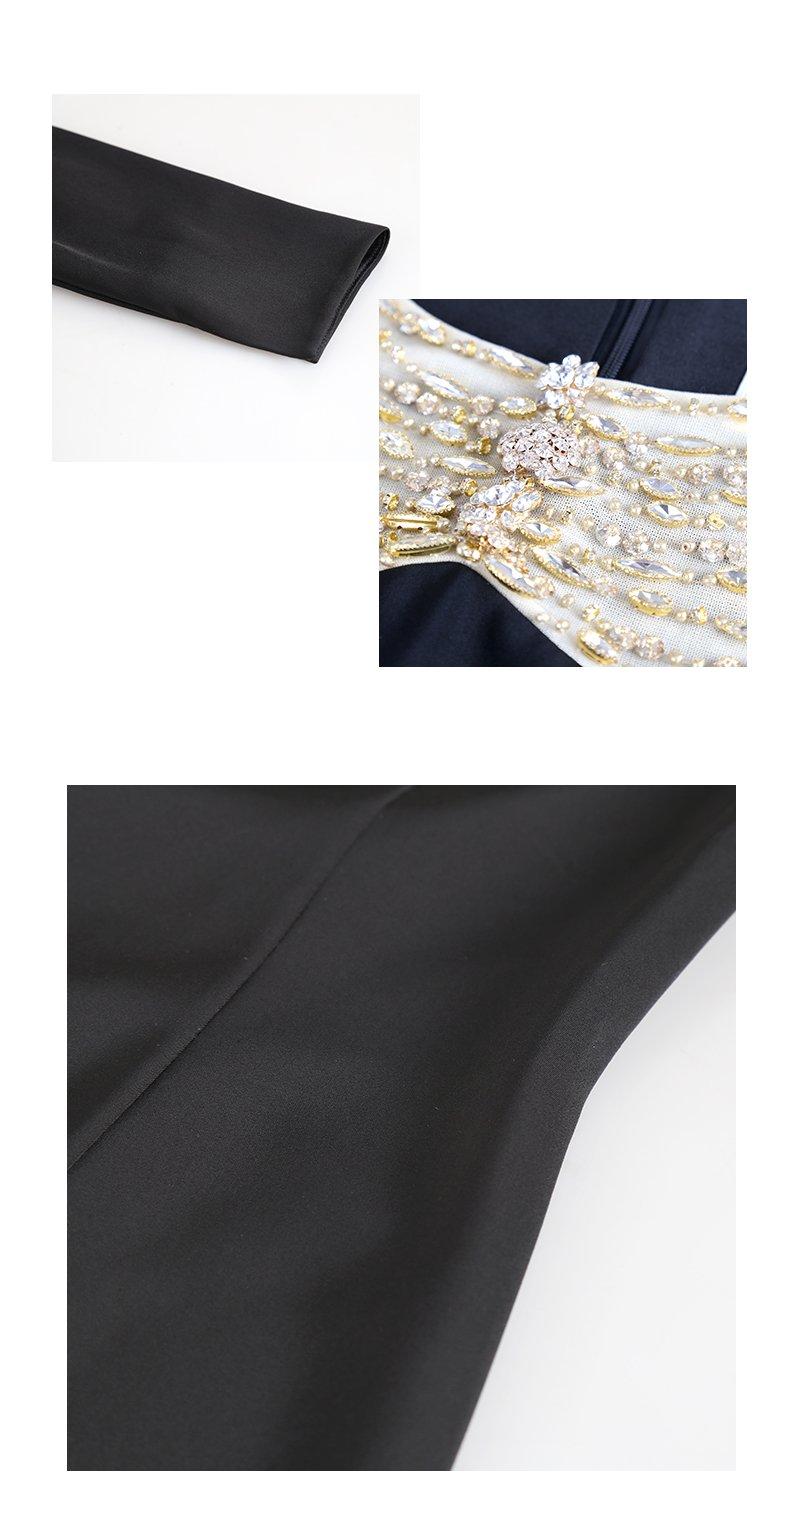 Bodycon black lbd fishtail dress - Kara